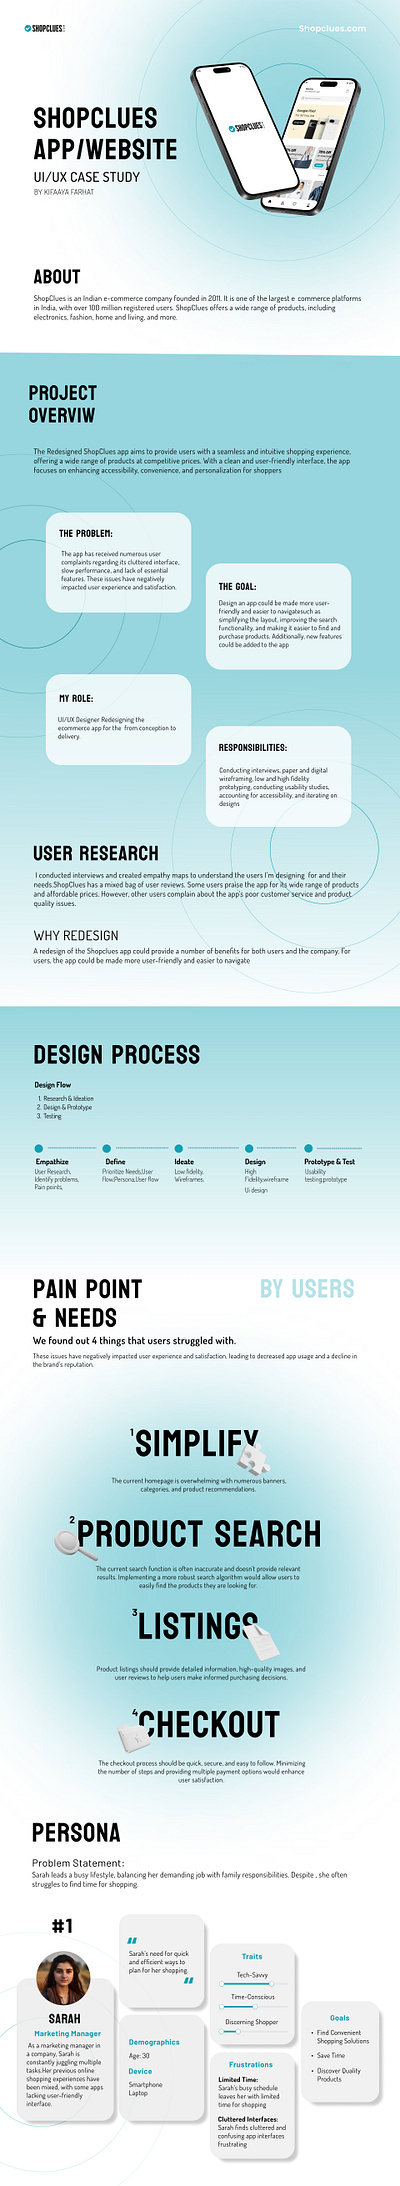 Shopclues - UI/UX Case study | Redesign UI app design ecommerce figma graphic design interaction design ui uiux user experience user interface ux case study website design